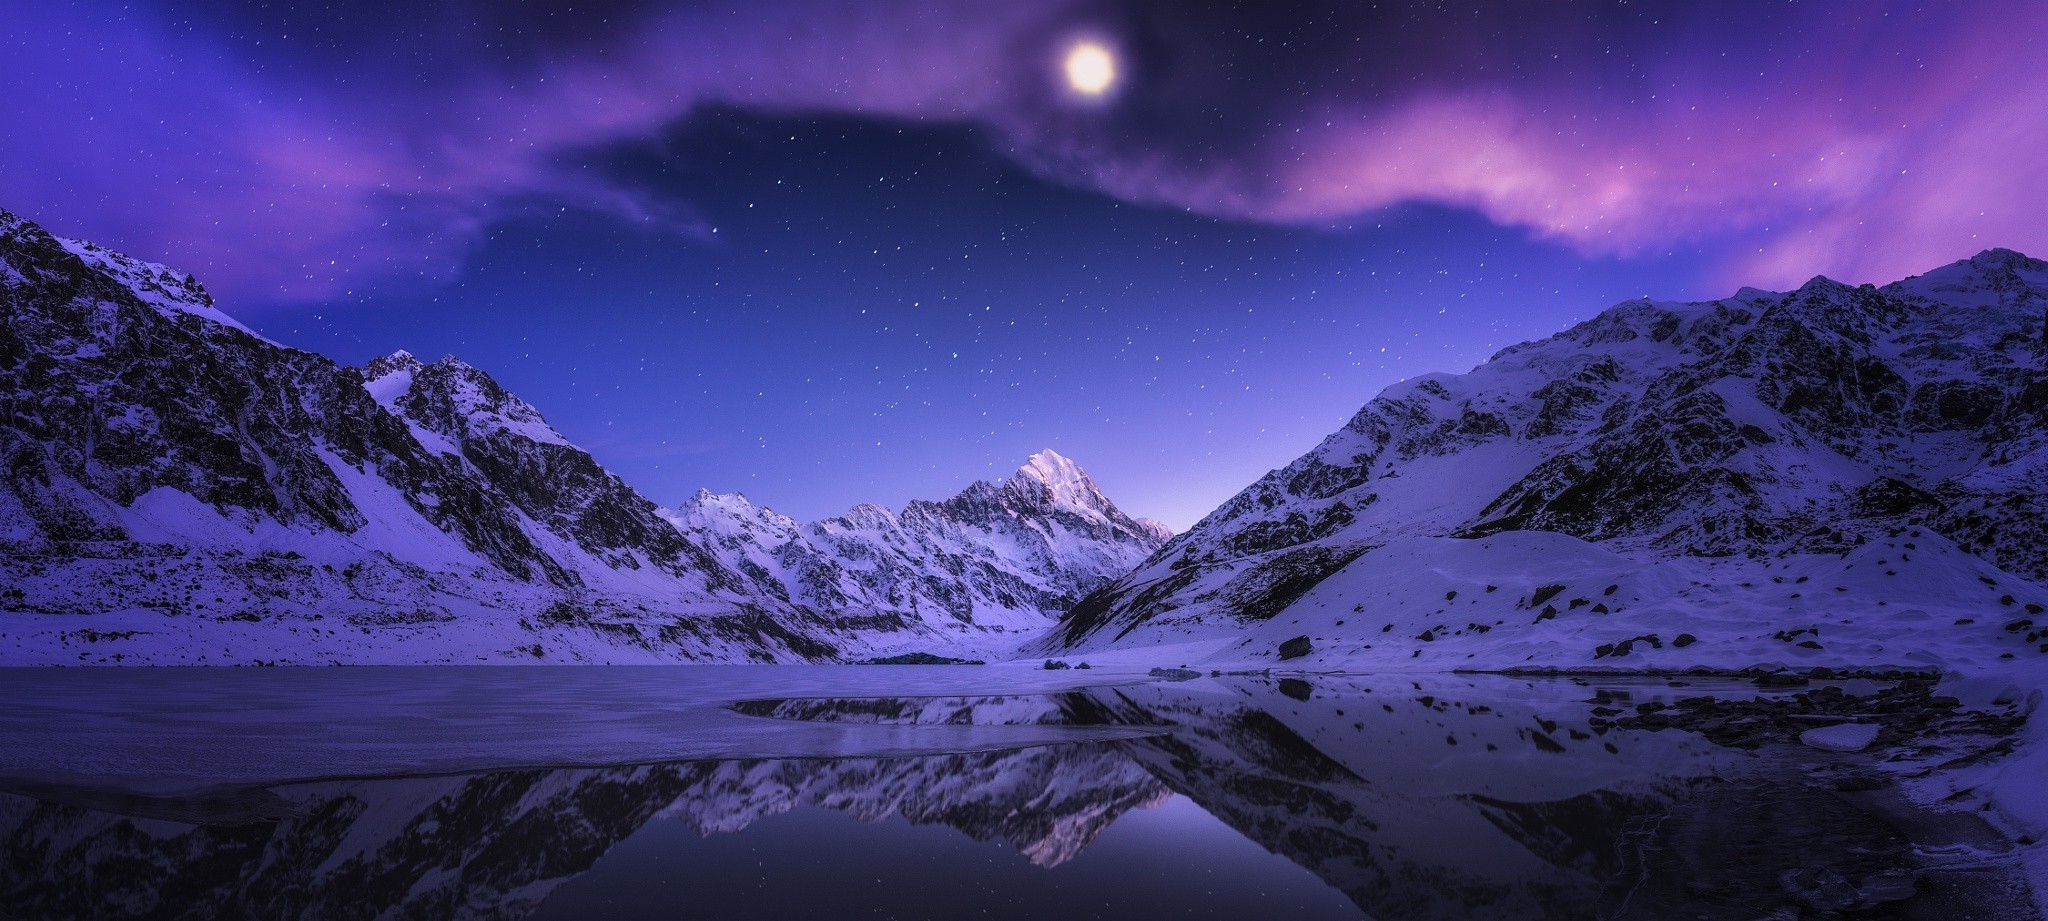 landscape Nature Lake Mountain Snow Reflection Stars